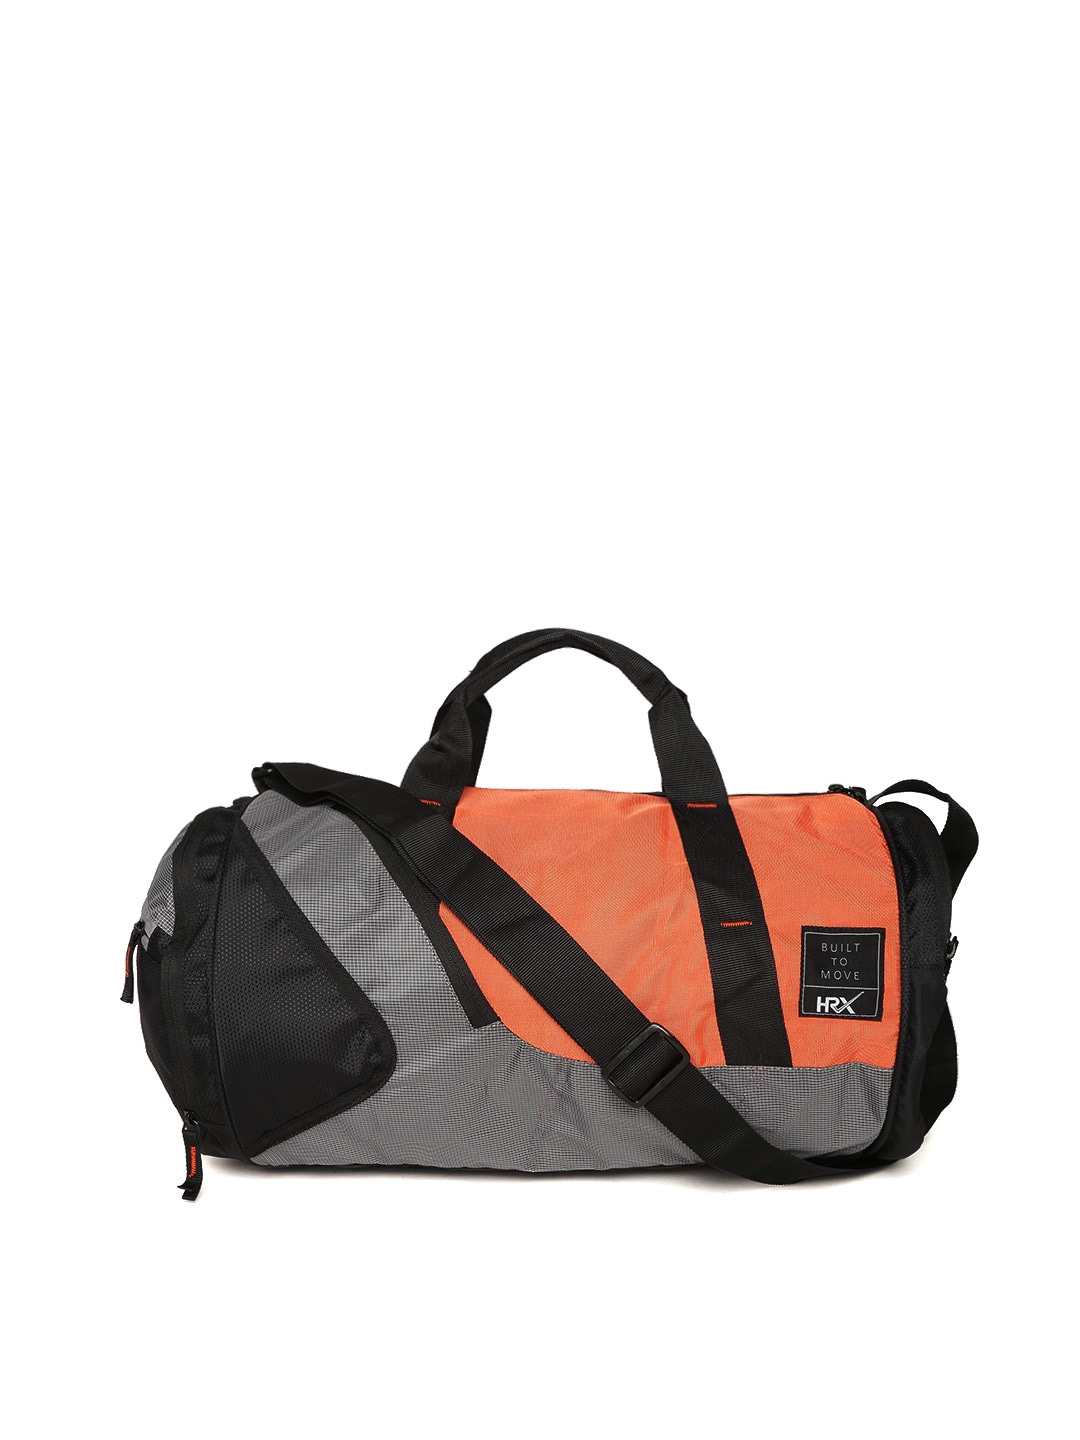 Accessories Duffel Bag | HRX by Hrithik Roshan Unisex Black & Orange Colourblocked Training Duffel Bag 16.3 L - ZX27553